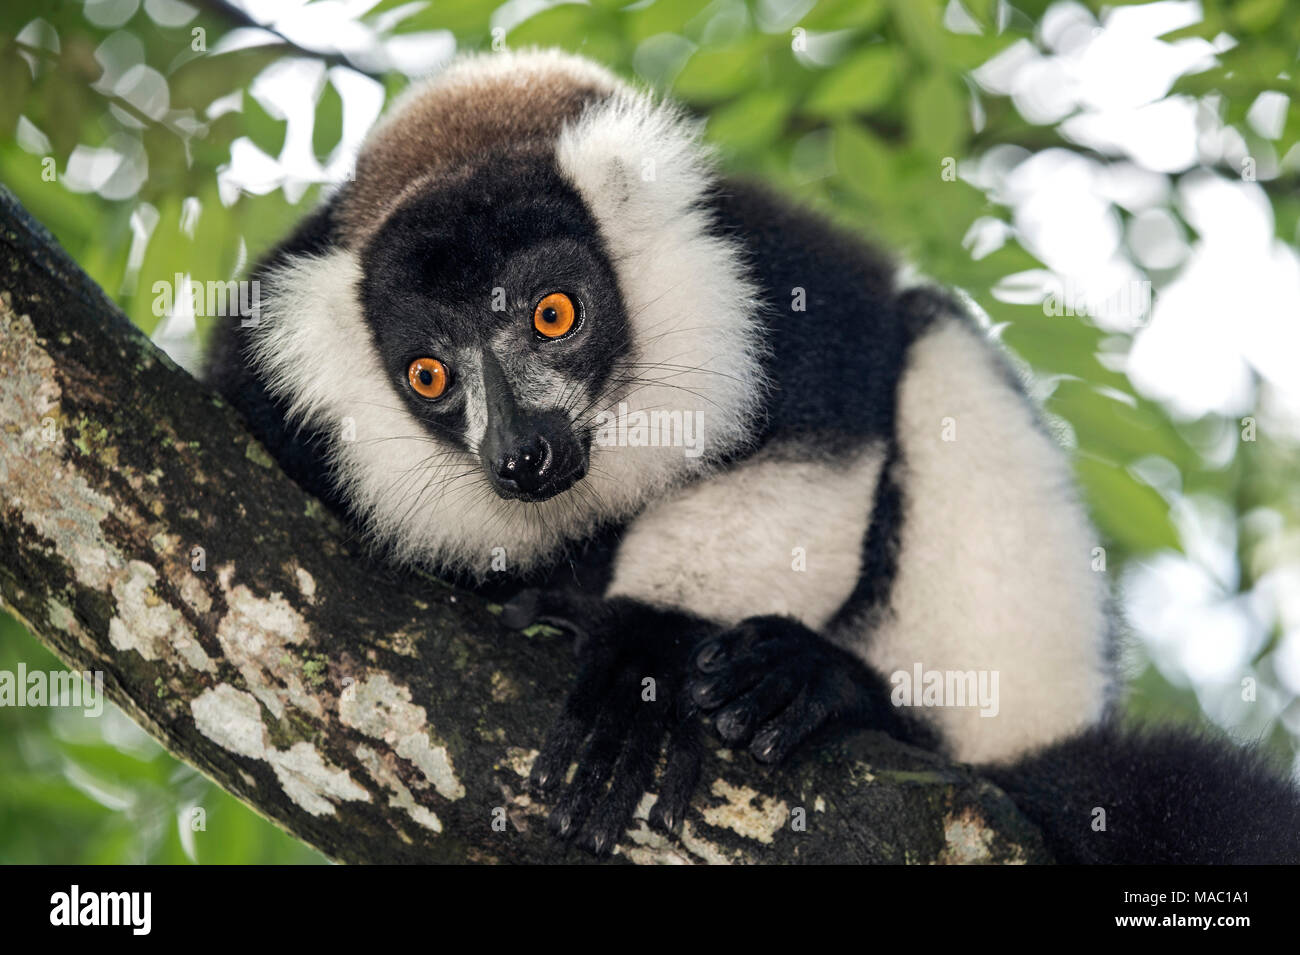 Black-and-white ruffed lemur (Lemur varecia variegata), Lemuridae family, endemic to Madagascar, Ankanin Ny Nofy, Madagascar Stock Photo